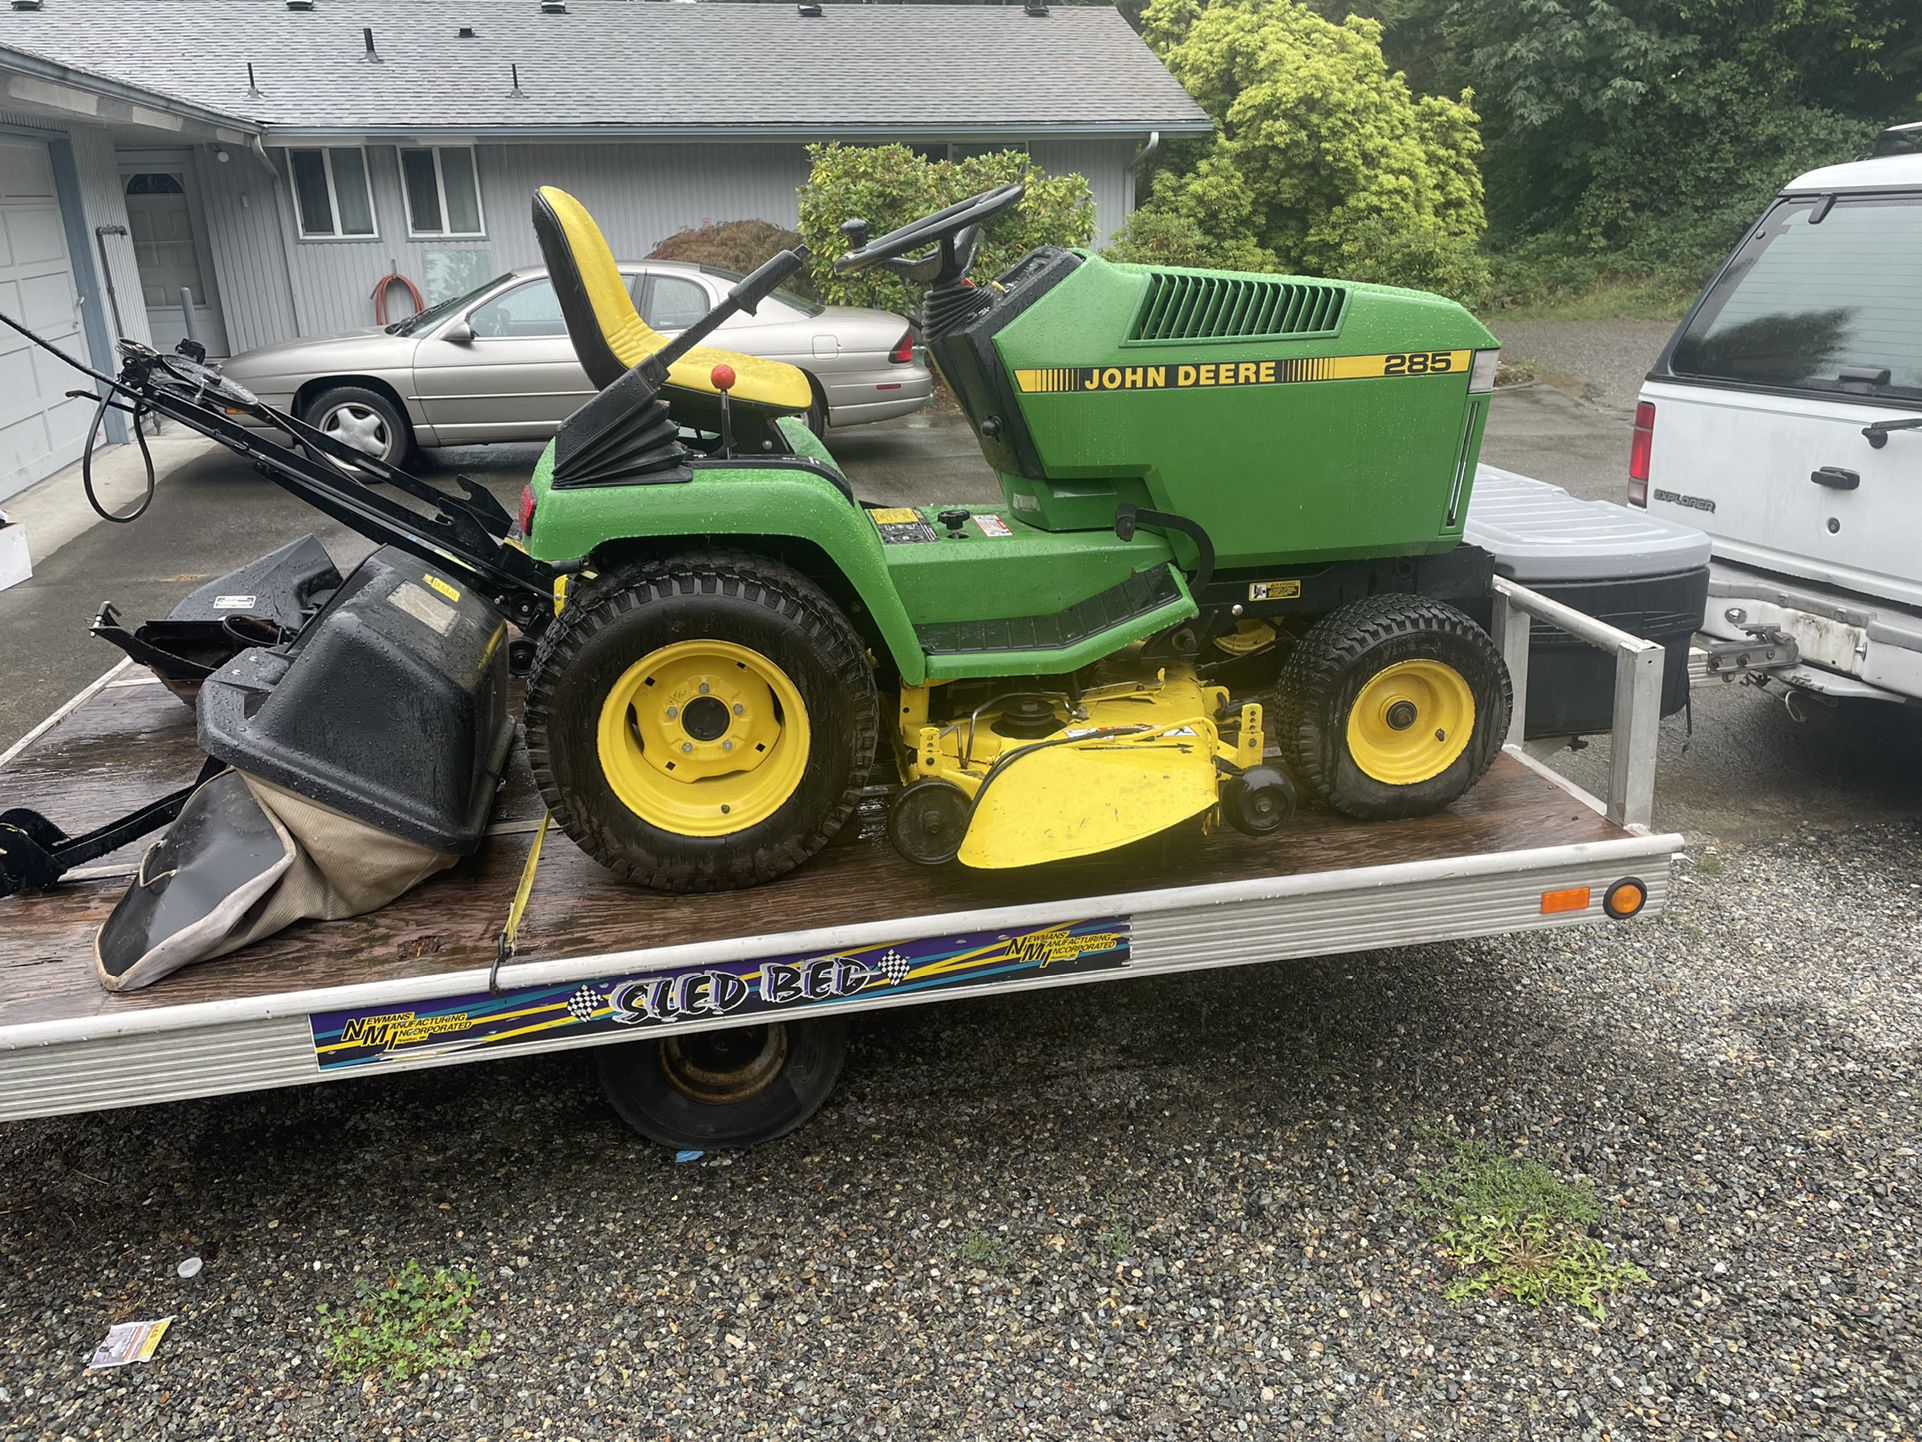 John Deere Garden Tractor 285 With Attachments